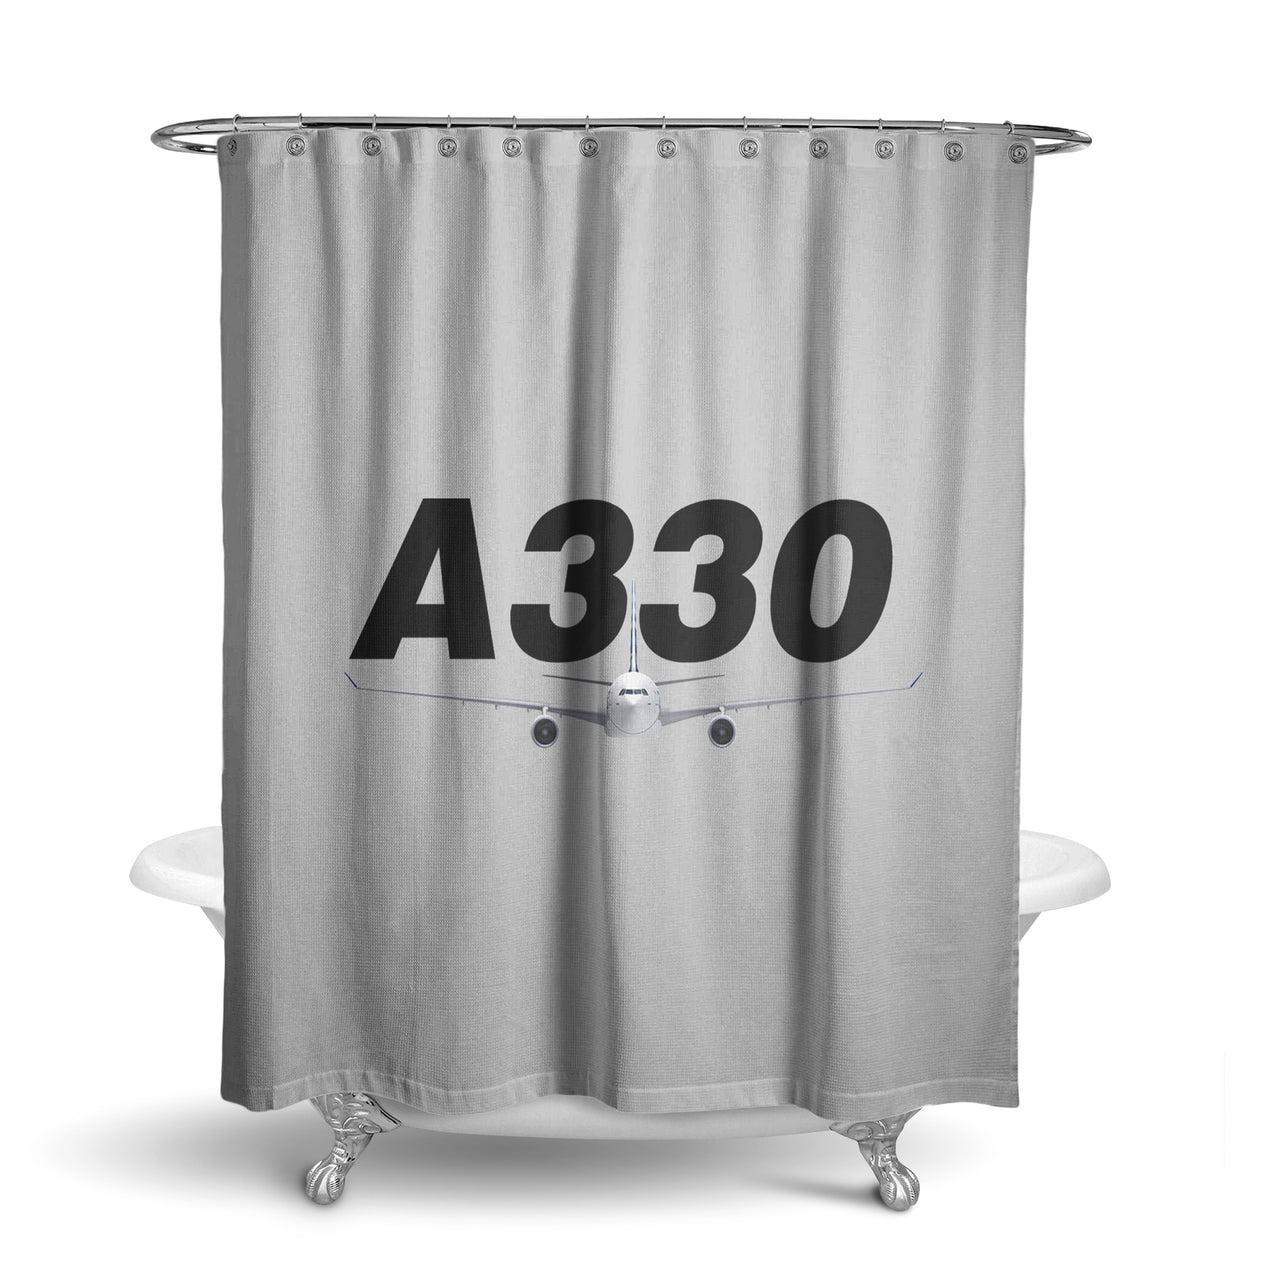 Super Airbus A330 Designed Shower Curtains